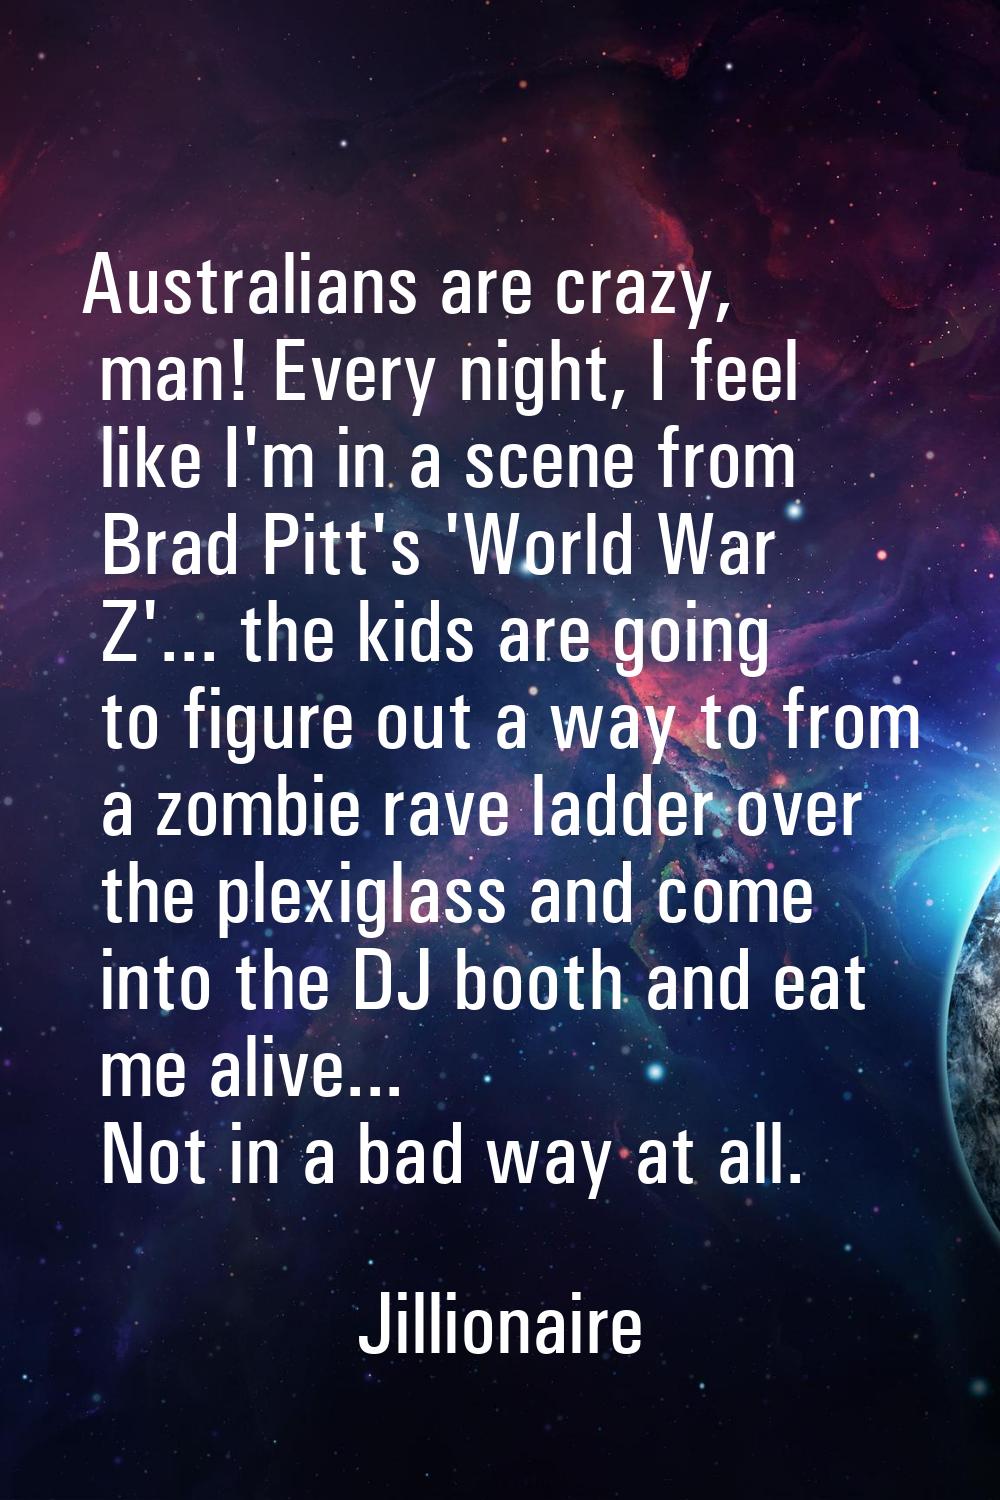 Australians are crazy, man! Every night, I feel like I'm in a scene from Brad Pitt's 'World War Z'.